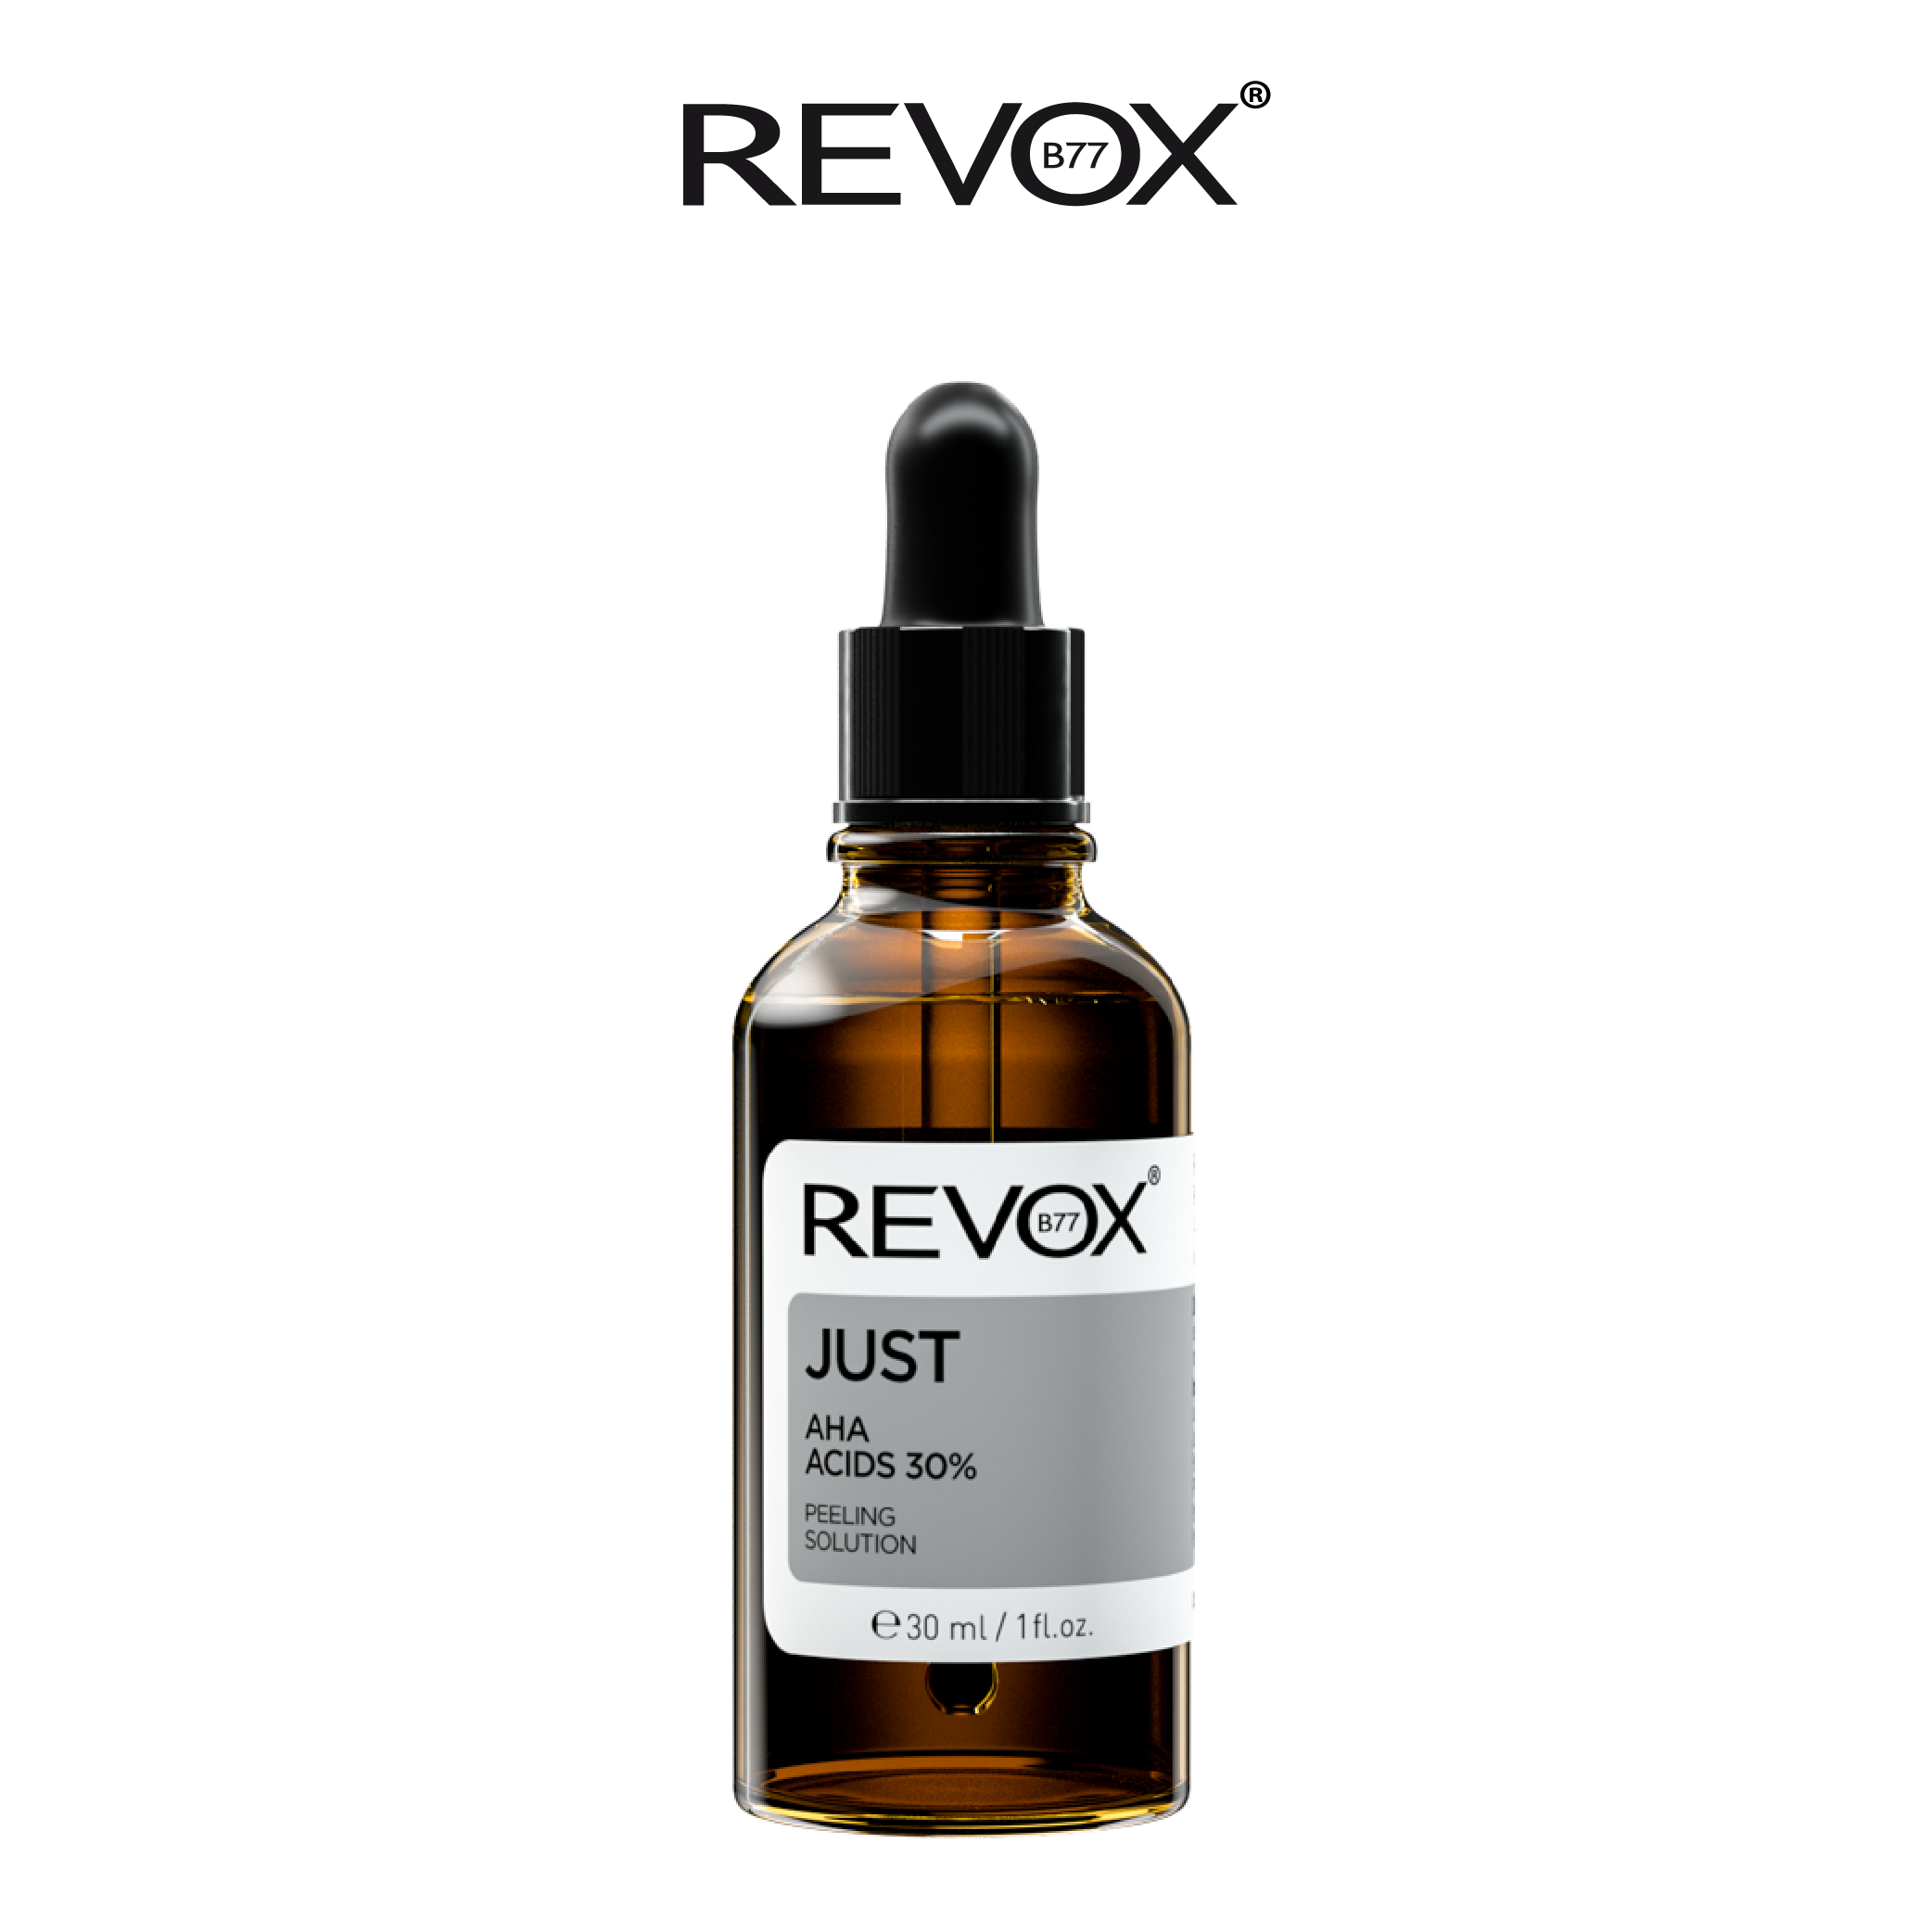 Tinh chất tẩy tế bào chết cho da mặt Revox B77 Just - AHA Acids 30%